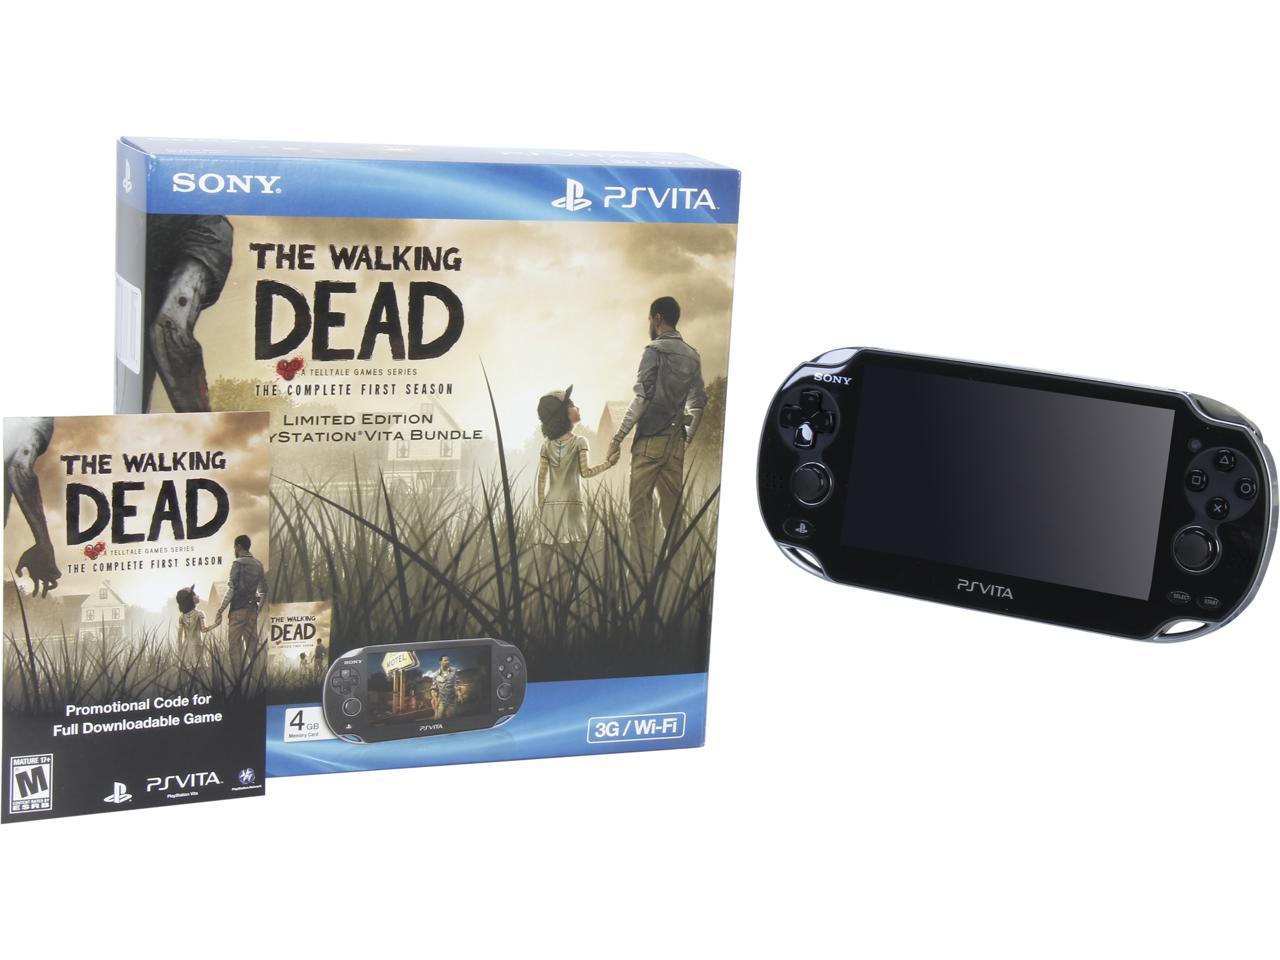 Dead ps vita. The Walking Dead PS Vita. Властелин колец PS Vita. PS Vita док станция купить.